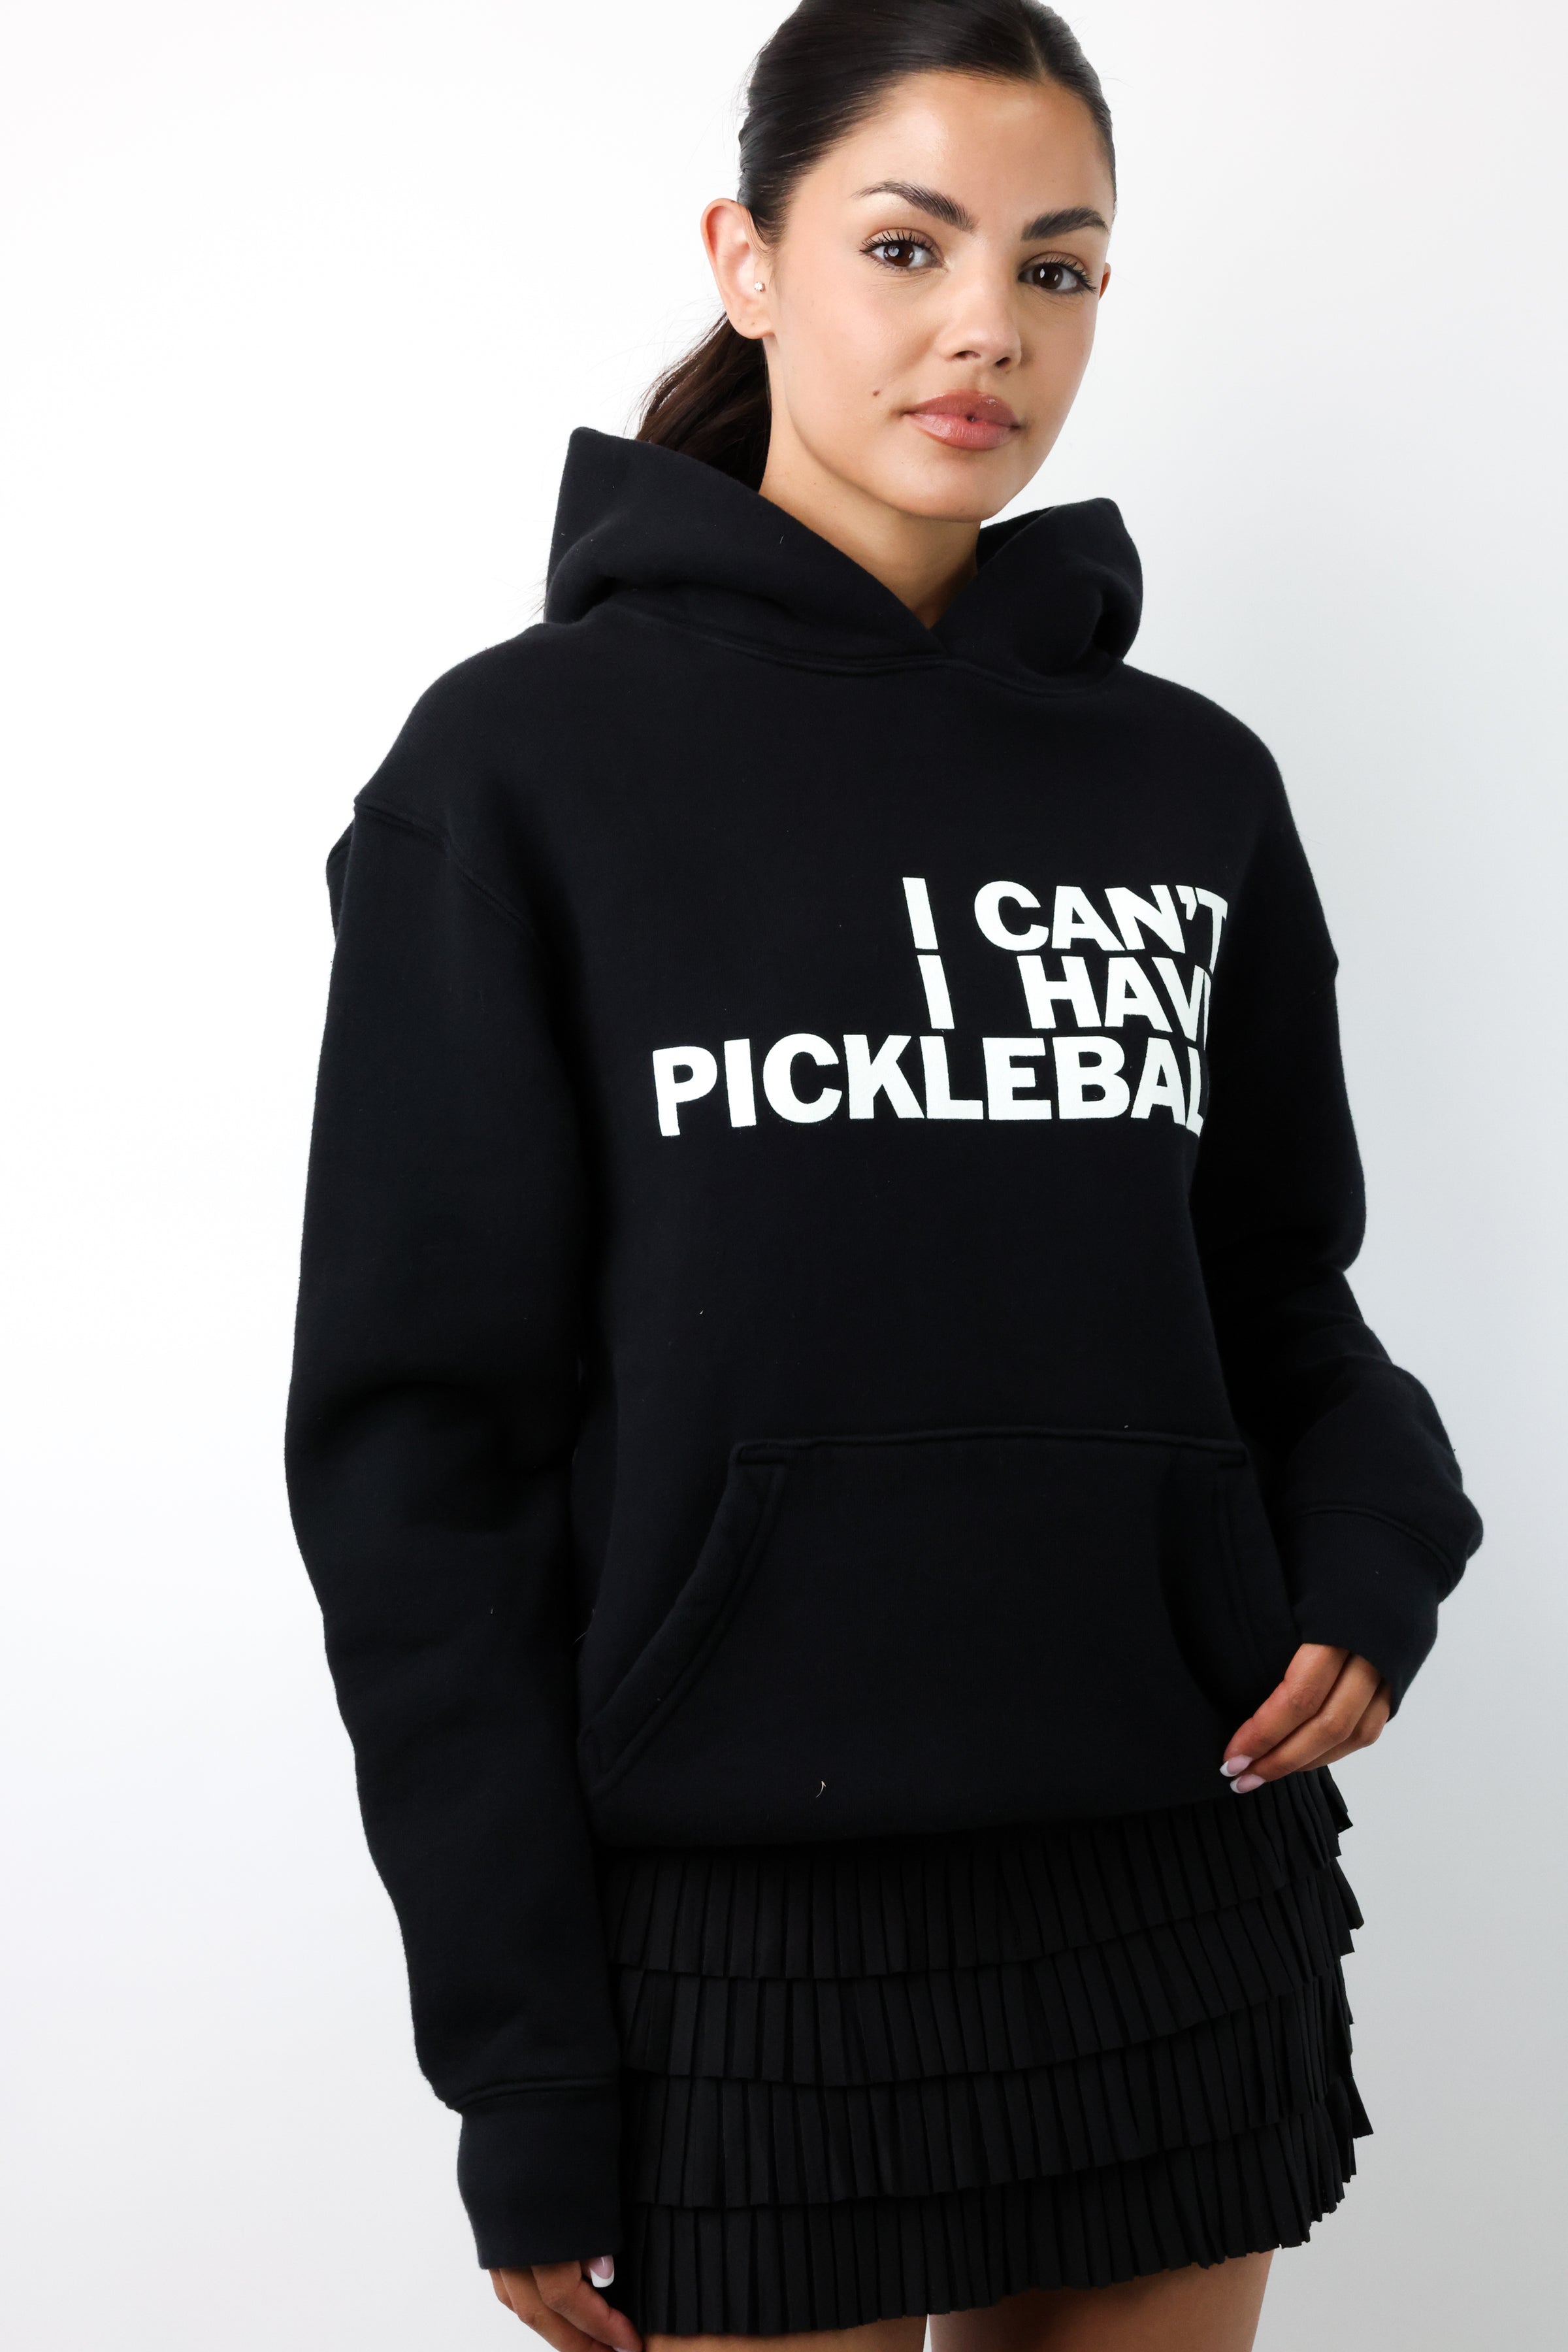 Richie "I Can't I Have Pickleball" Sweatshirt